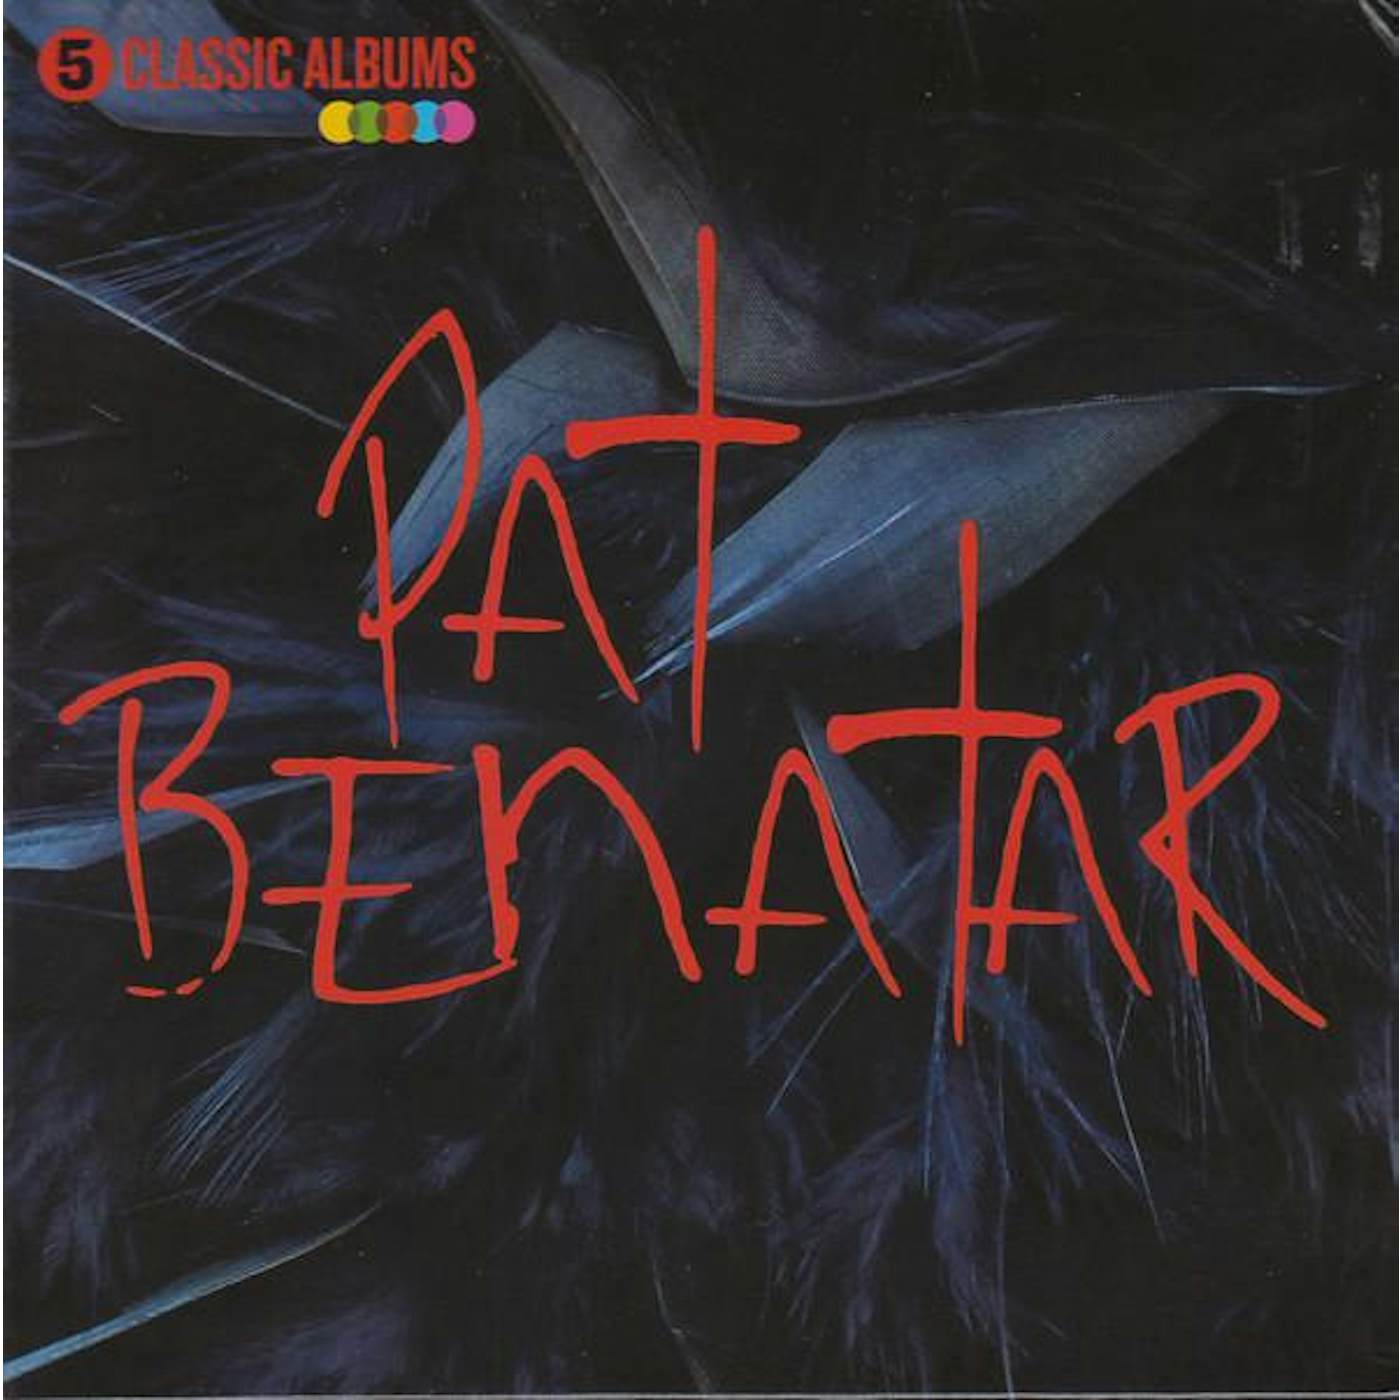 Pat Benatar 5 CLASSIC ALBUMS CD